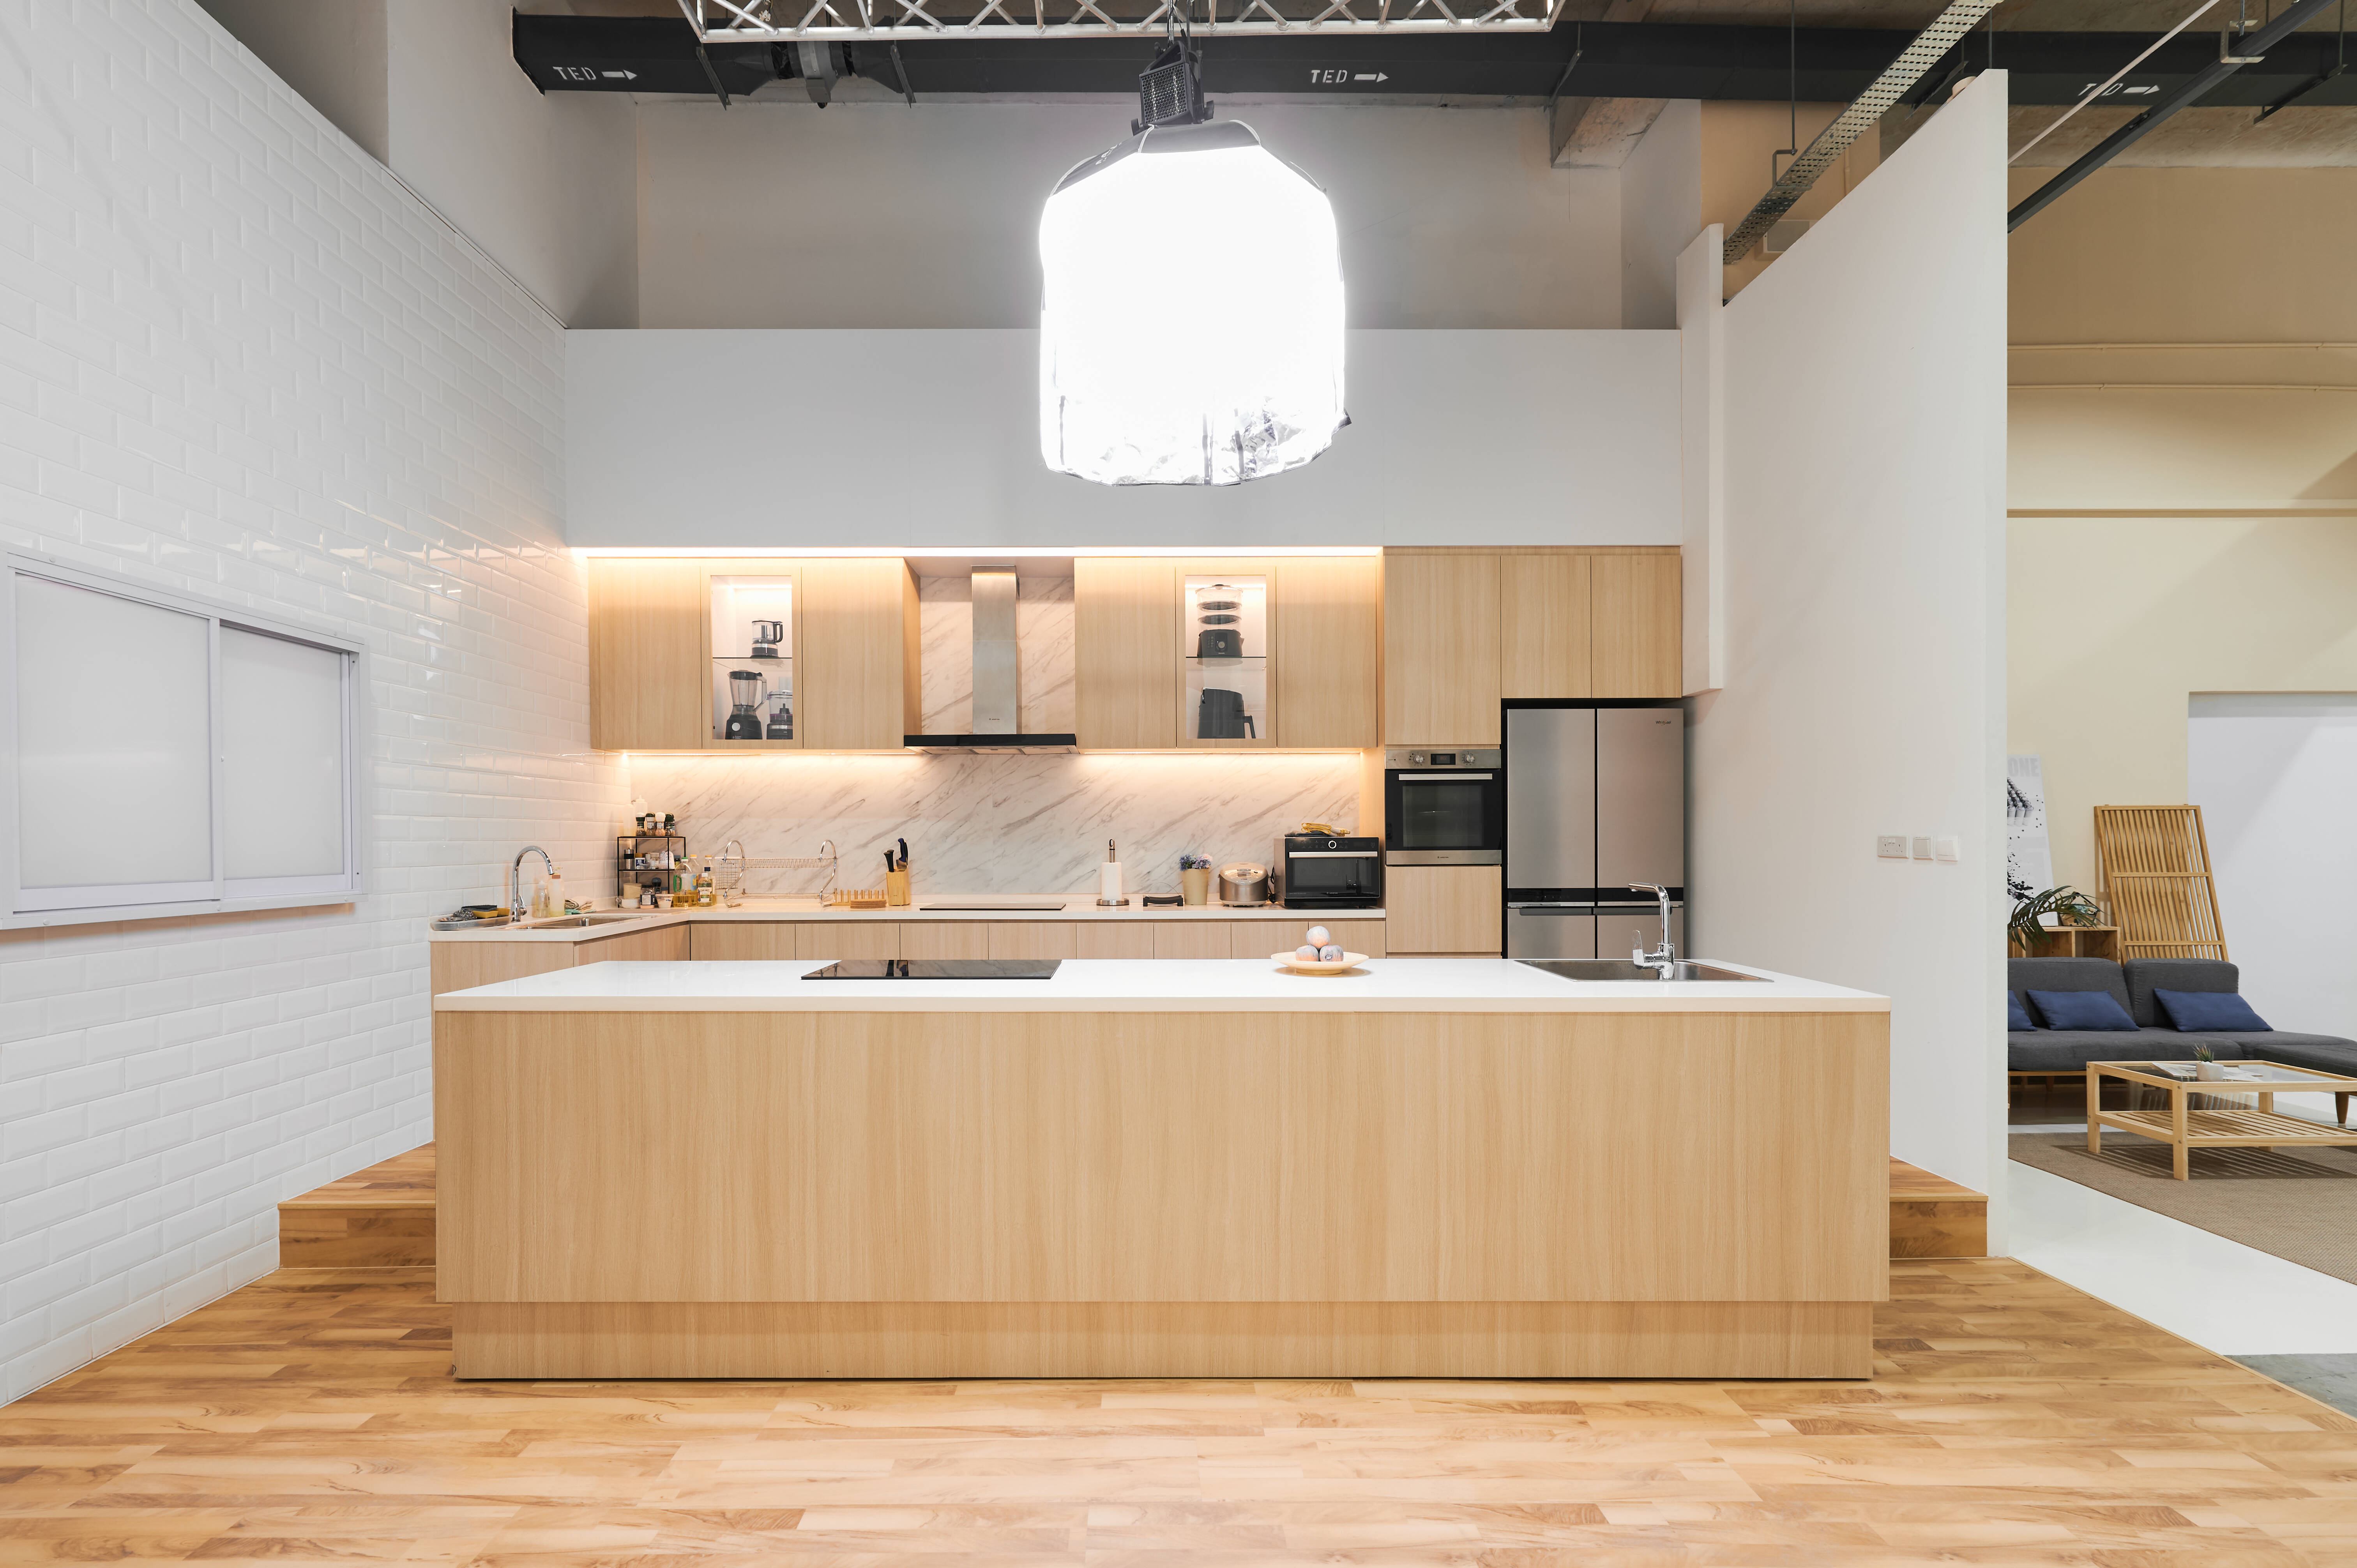 Kitchen & Living Space Studio